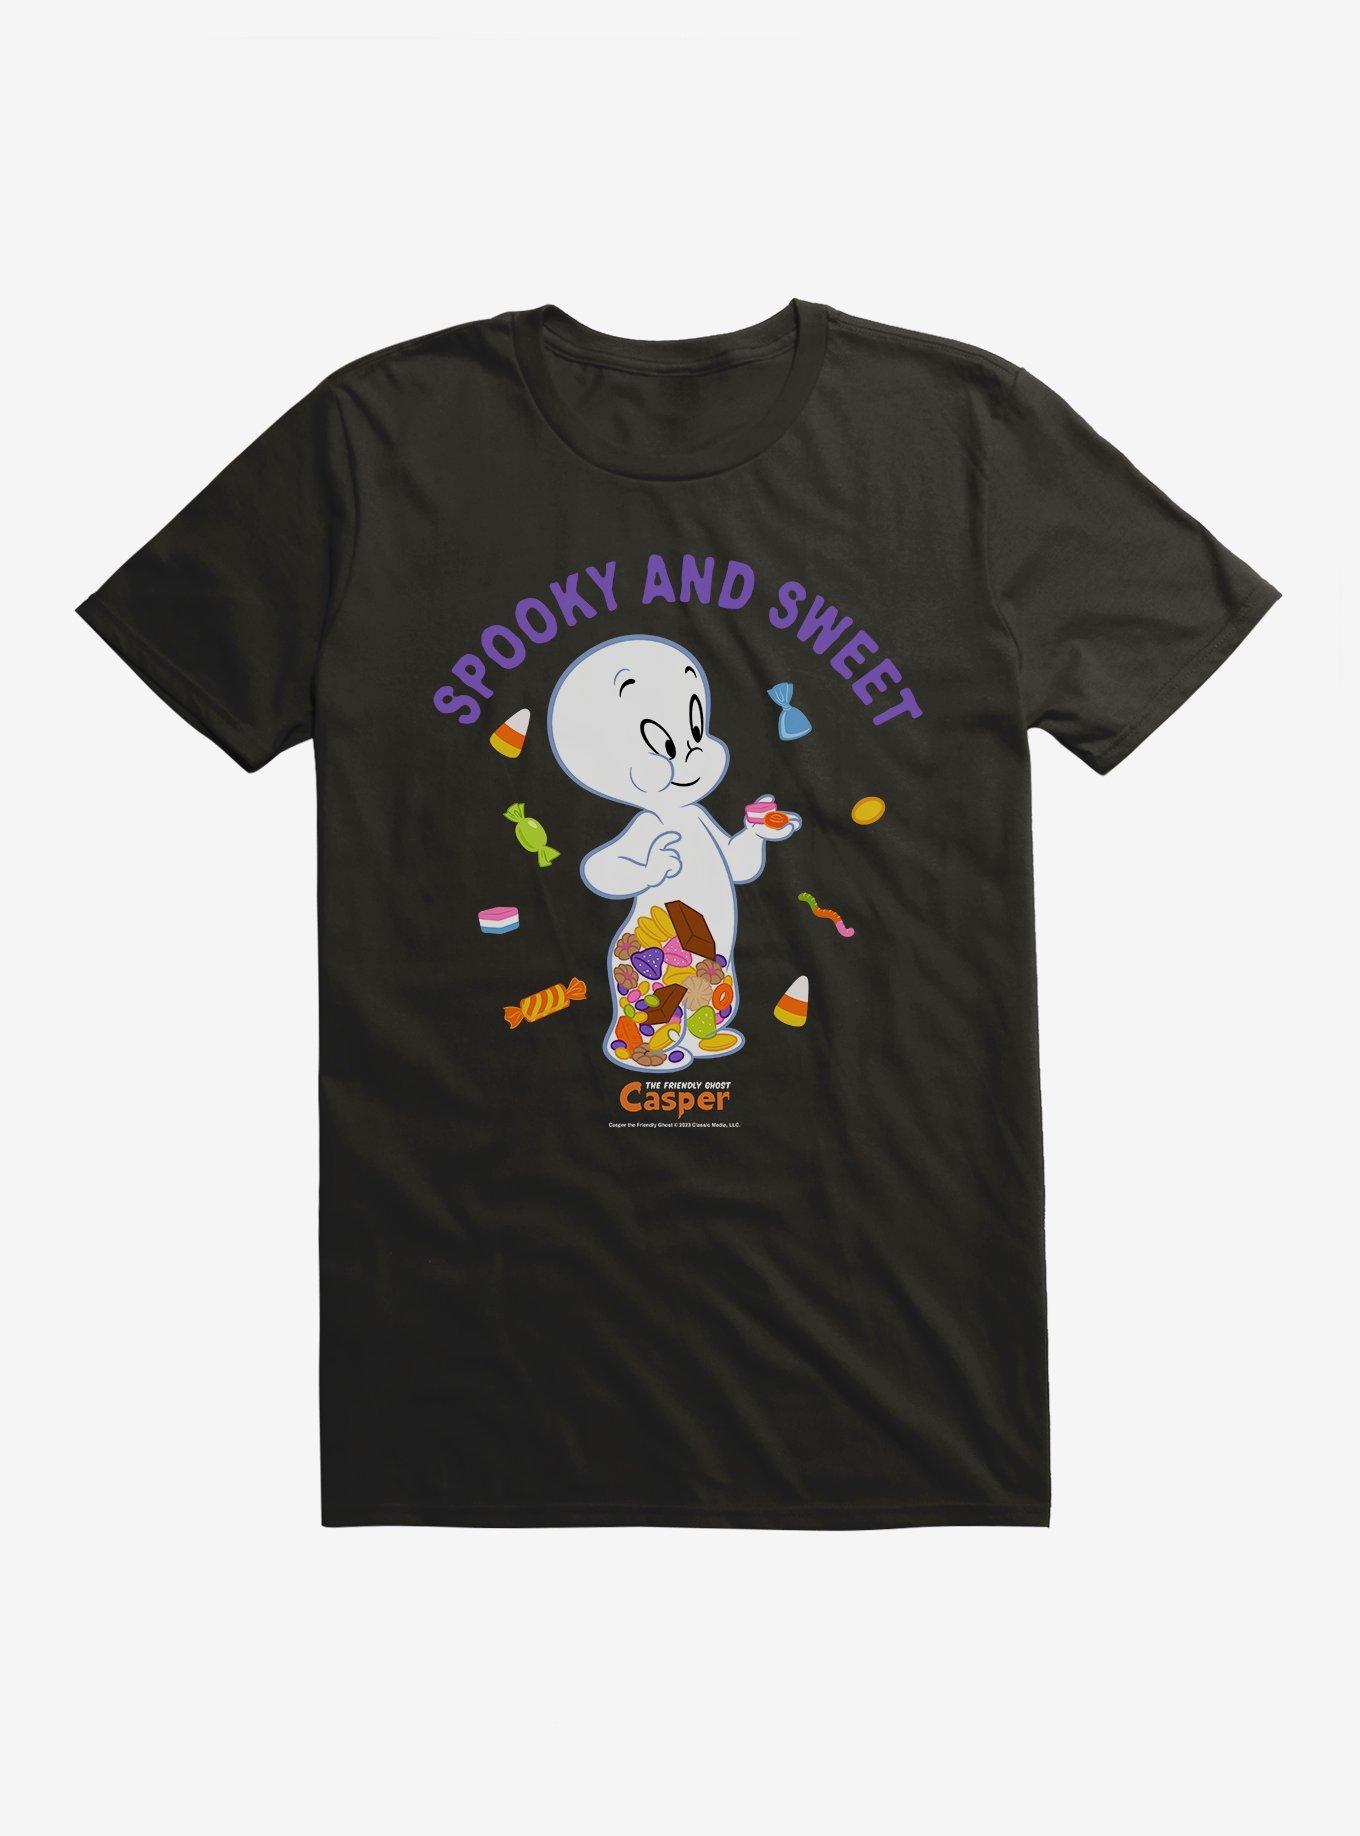 Casper Spooky And Sweet T-Shirt